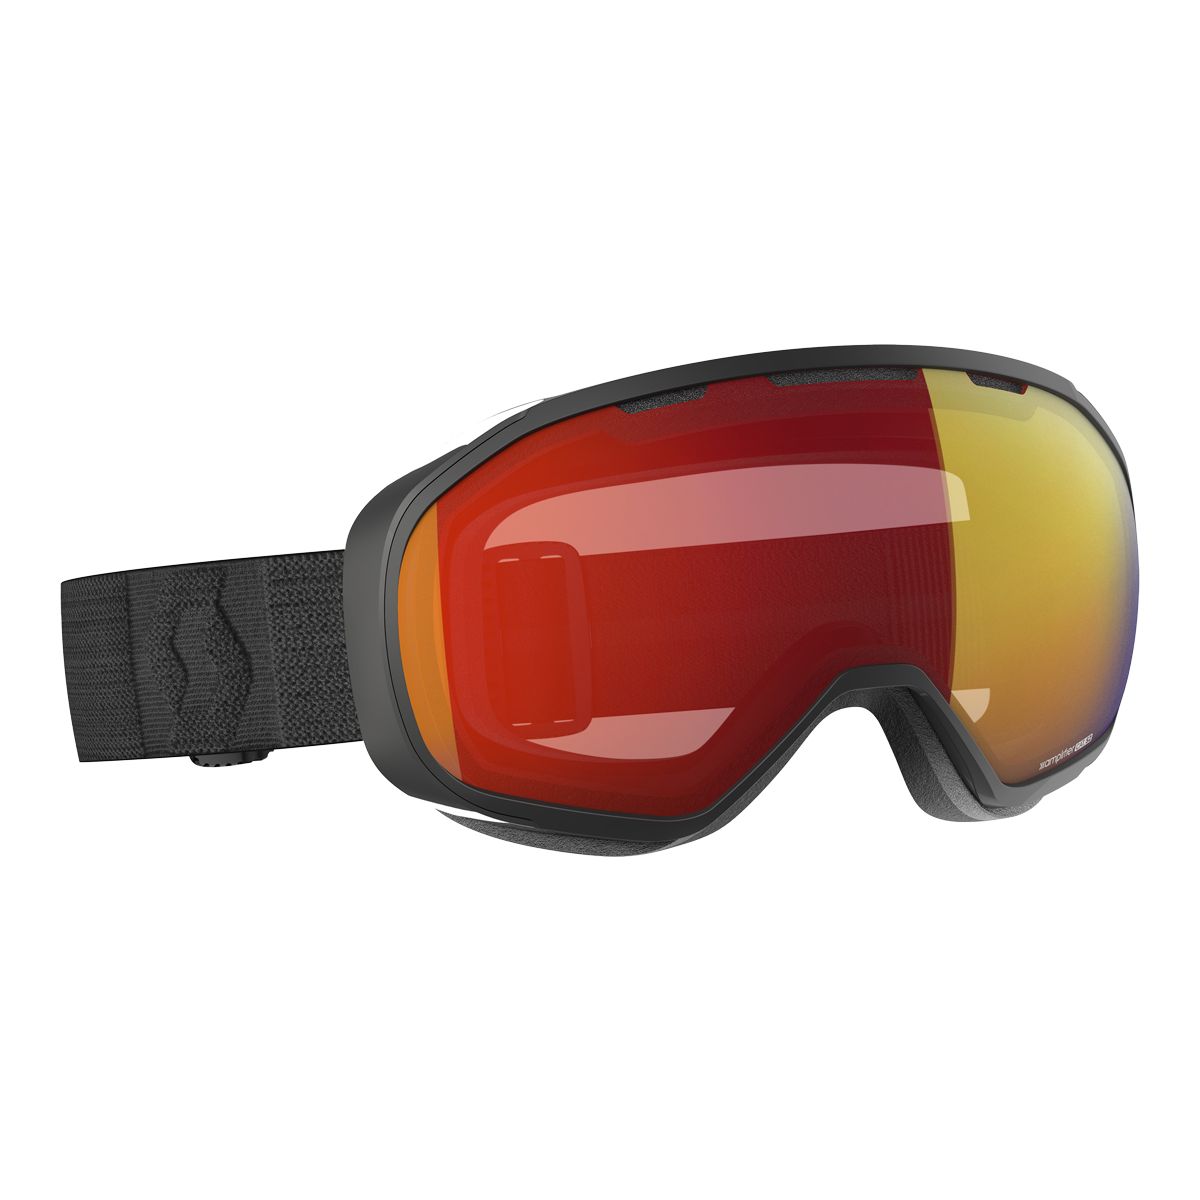 Scott Fix Ski & Snowboard Goggles 2018/19 - Black with Red Chrome Lens